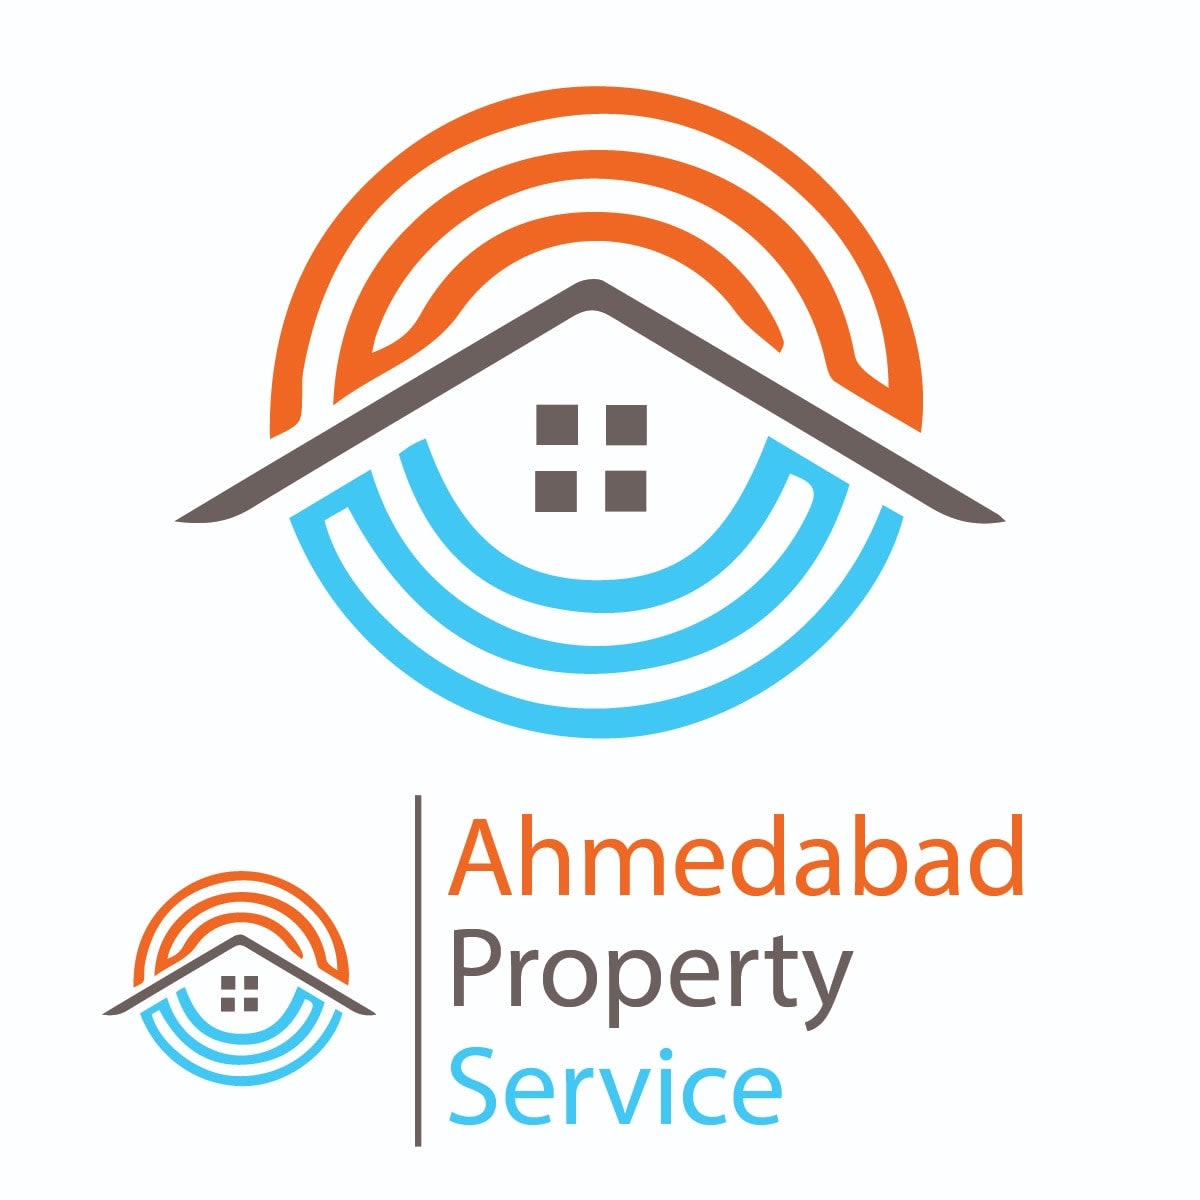 Ahmedabad Property Service